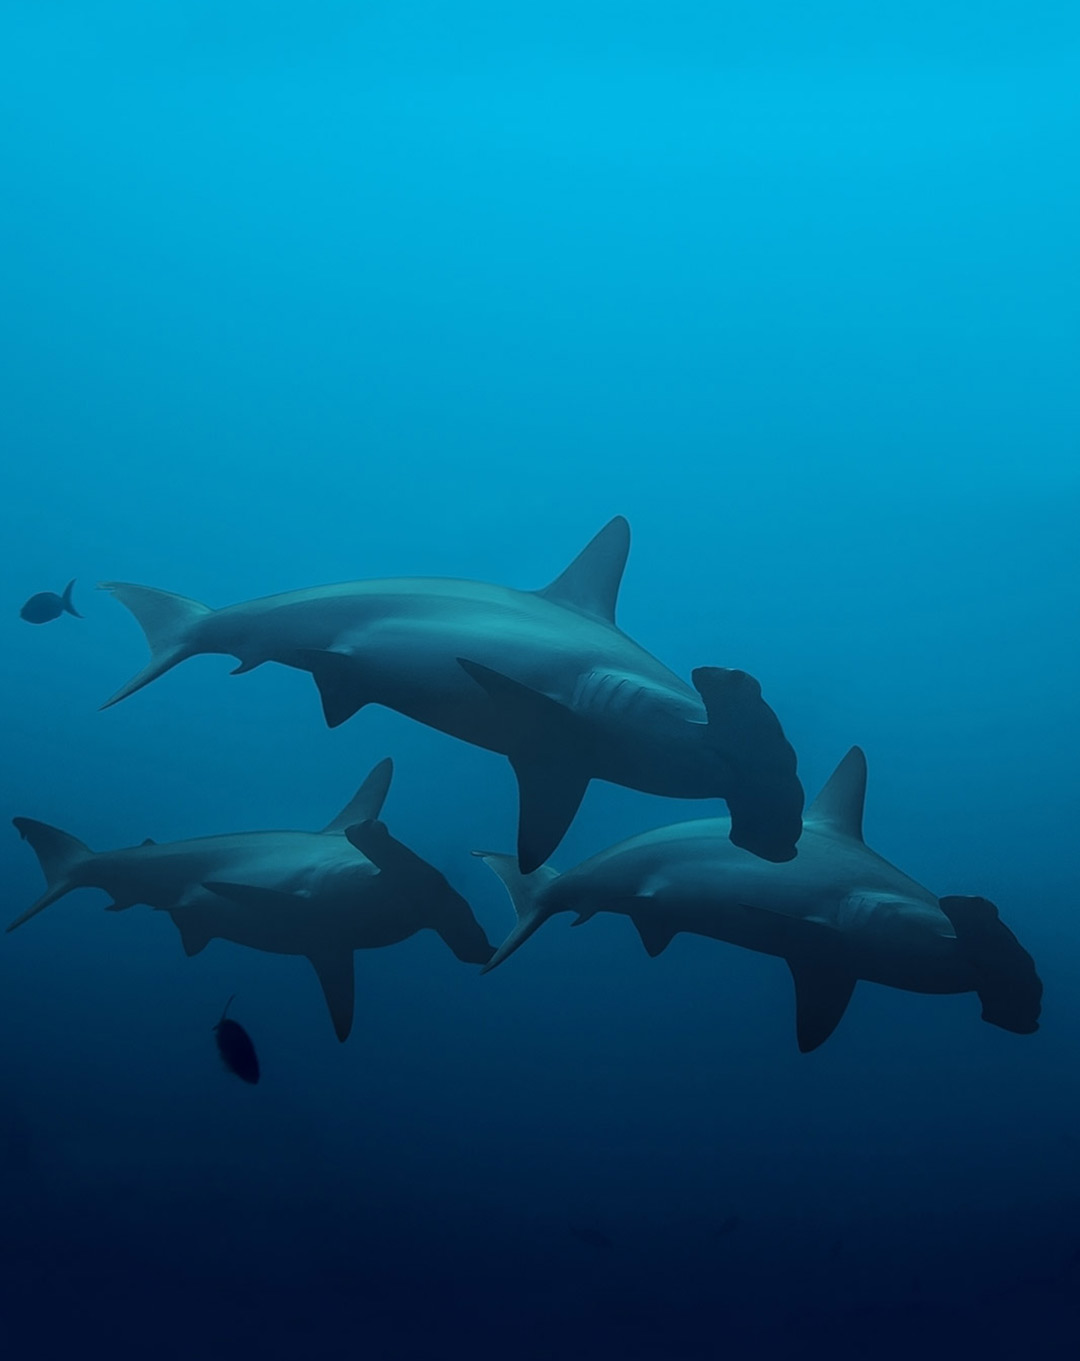 Hammerhead sharks liveaboard 8 days cruise special offer